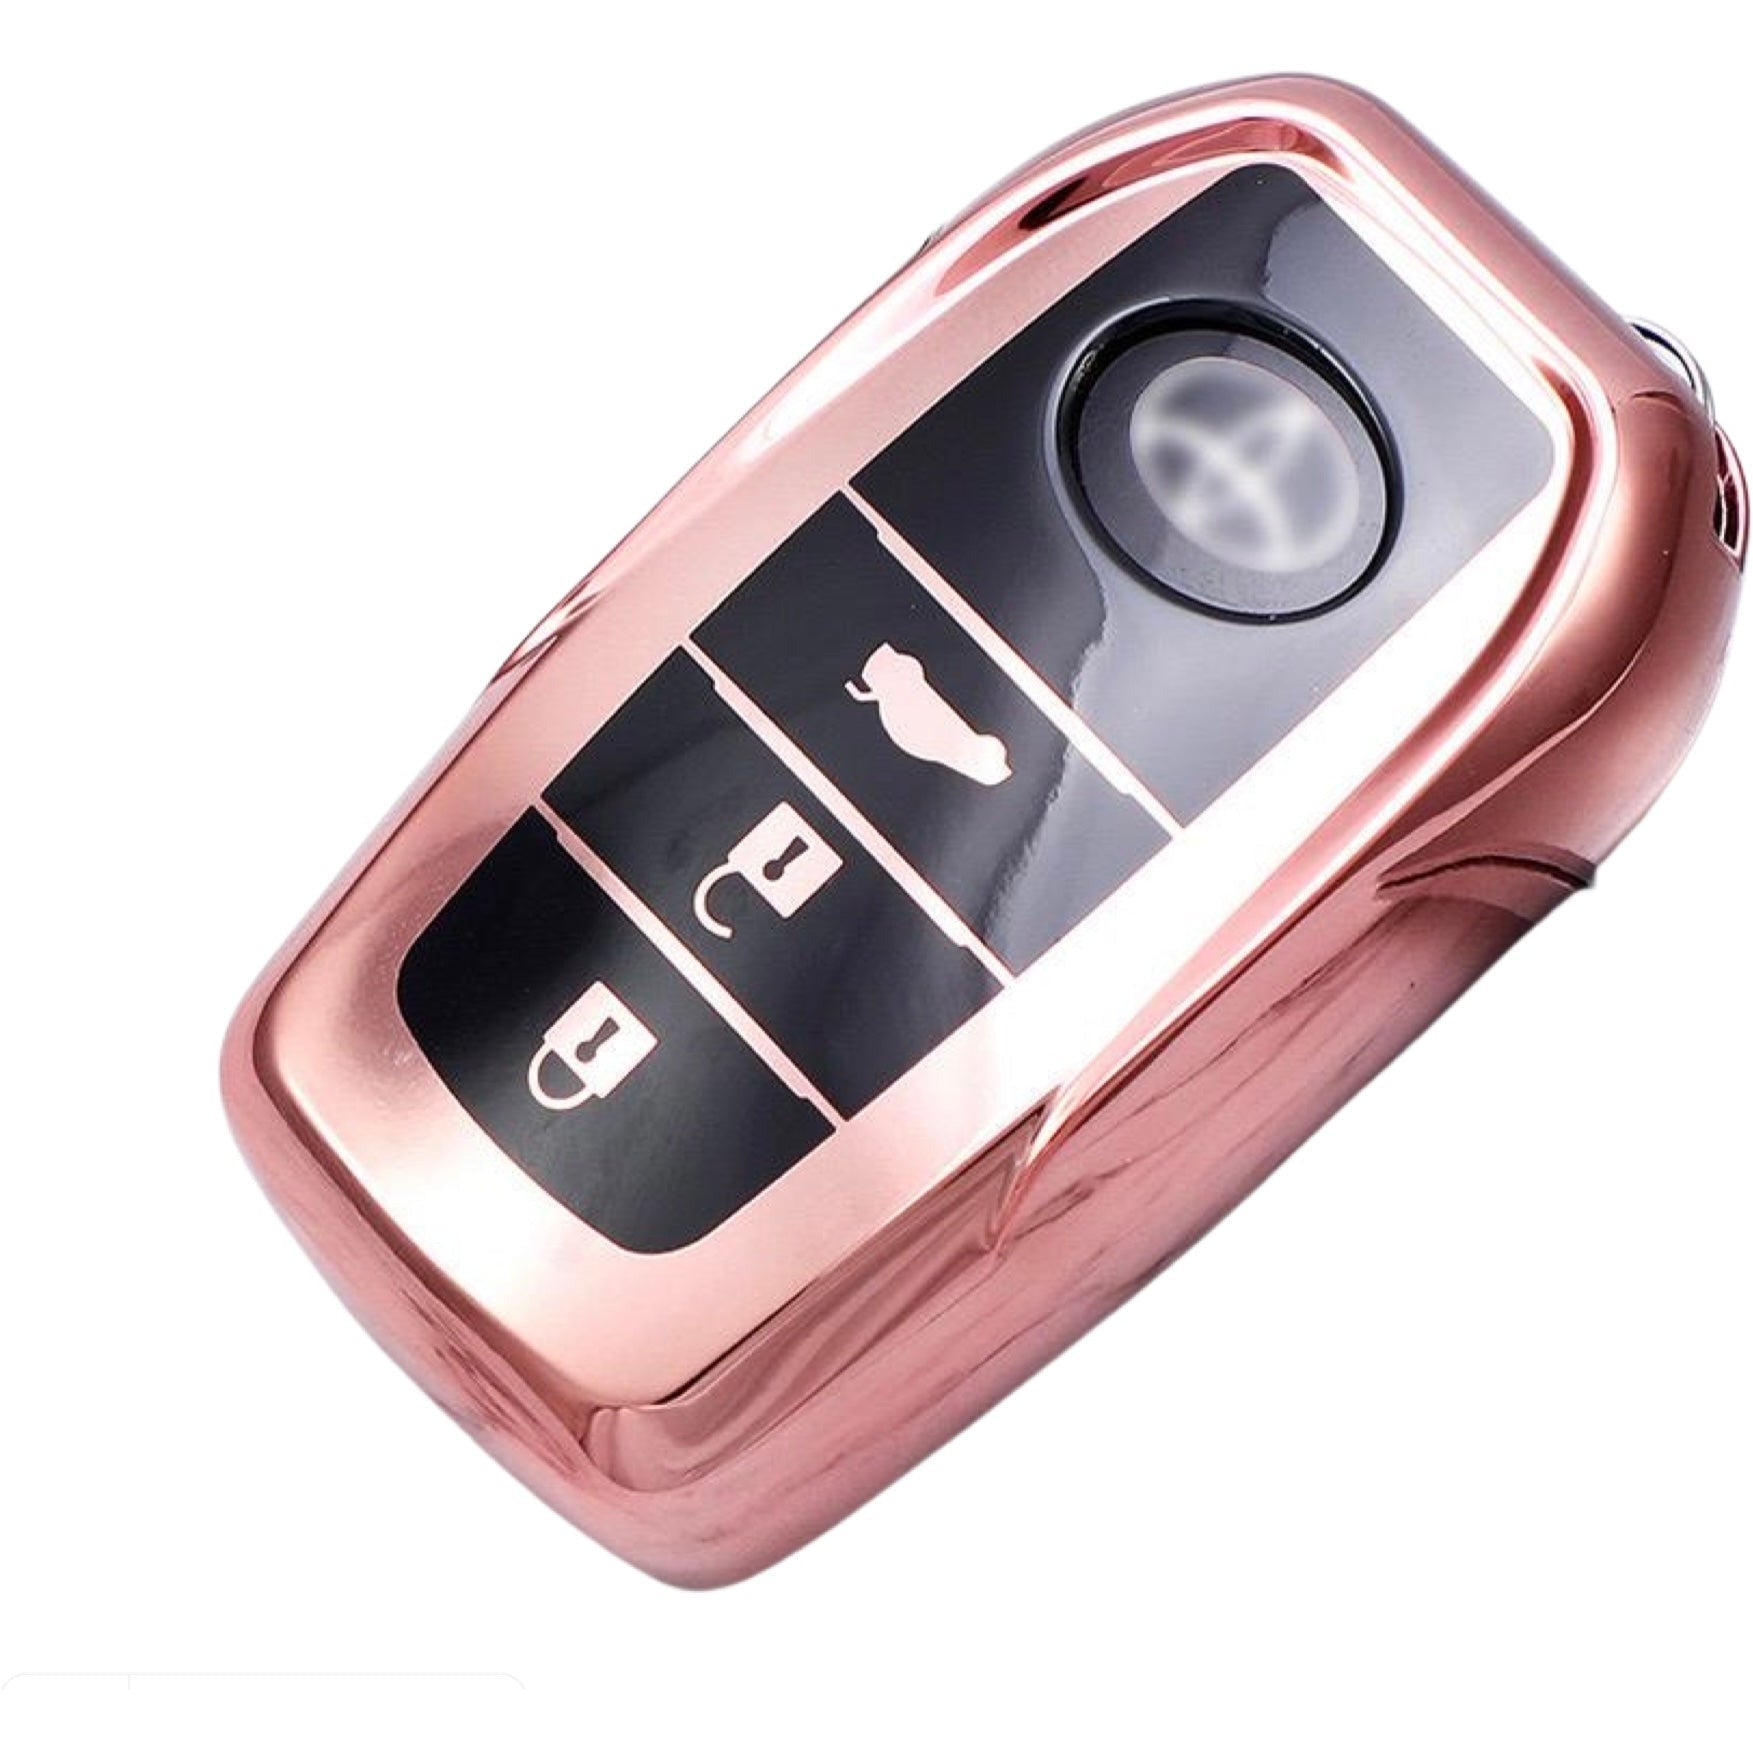 Toyota key cover pink | Hilux, Prado, Land Cruiser key fob cover | Toyota Accessories